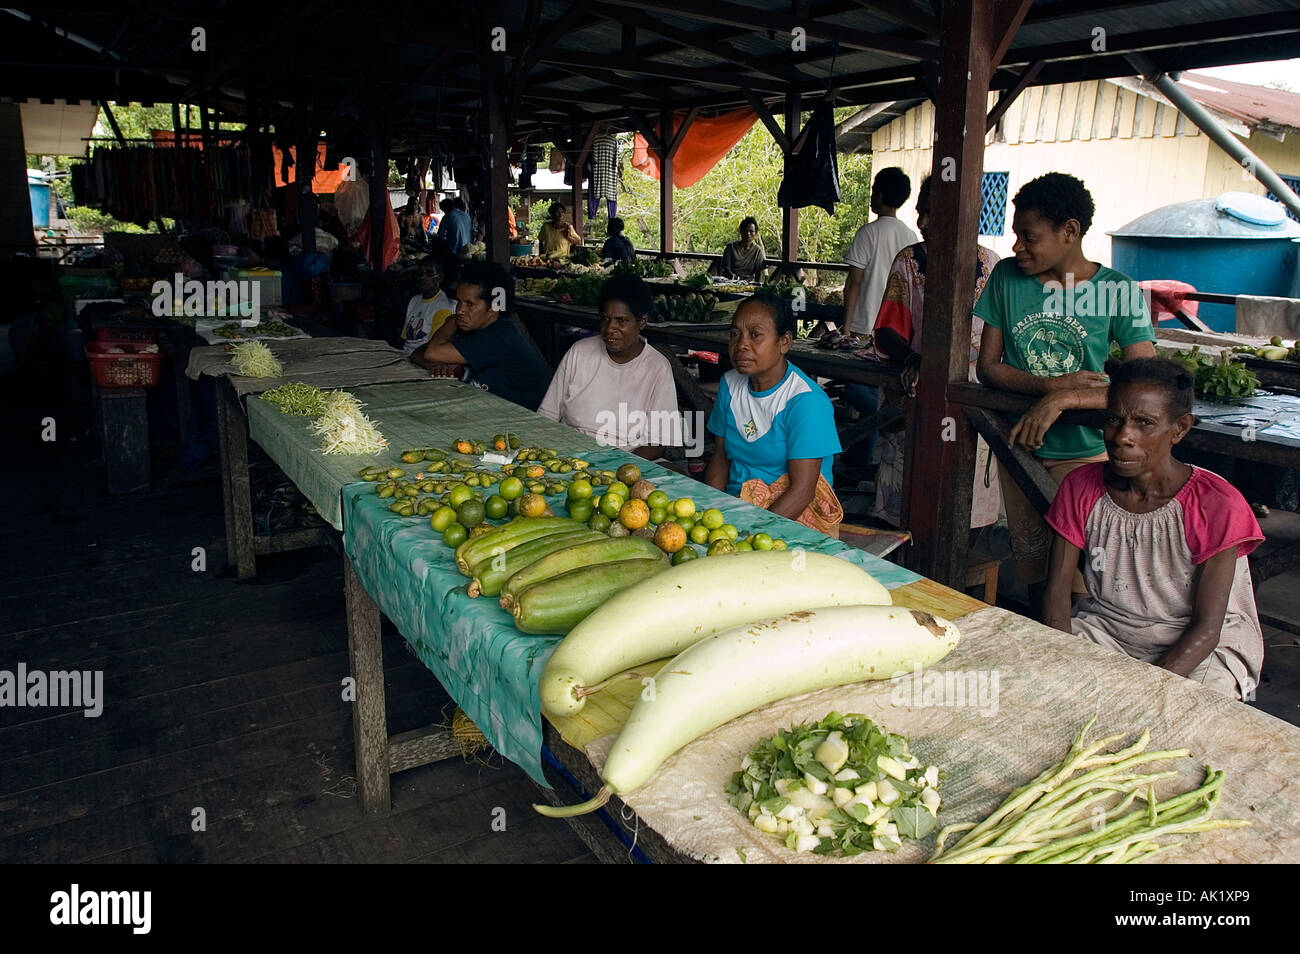 Food market, Agats, Irian Jaya Indonesia. Stock Photo